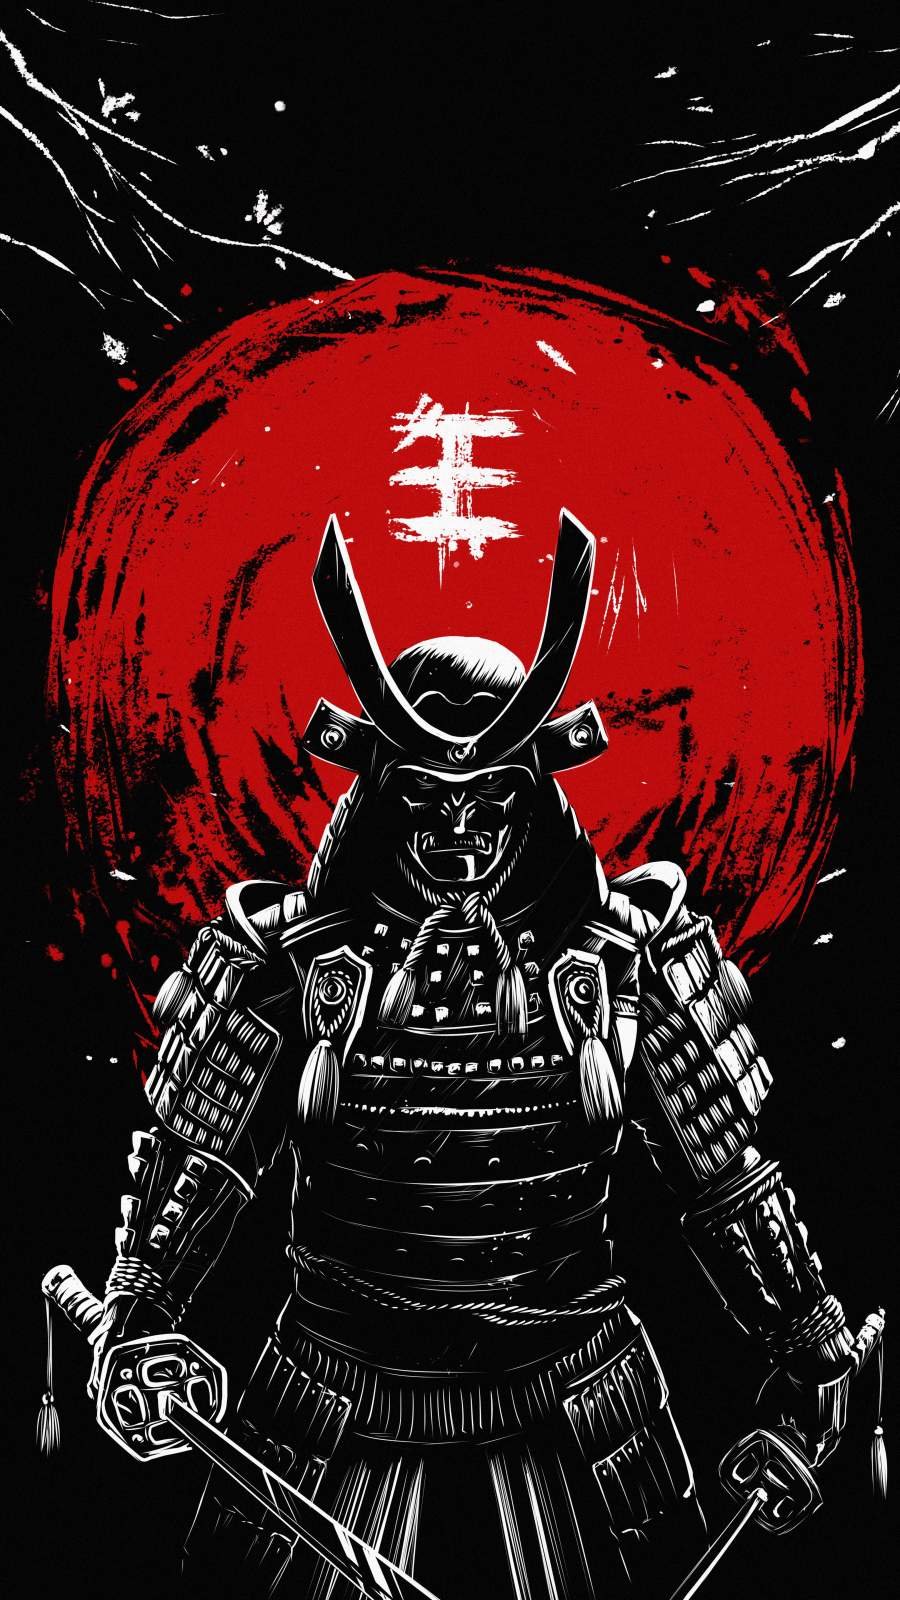 Samurai anime by killuazoldyck1412 on DeviantArt